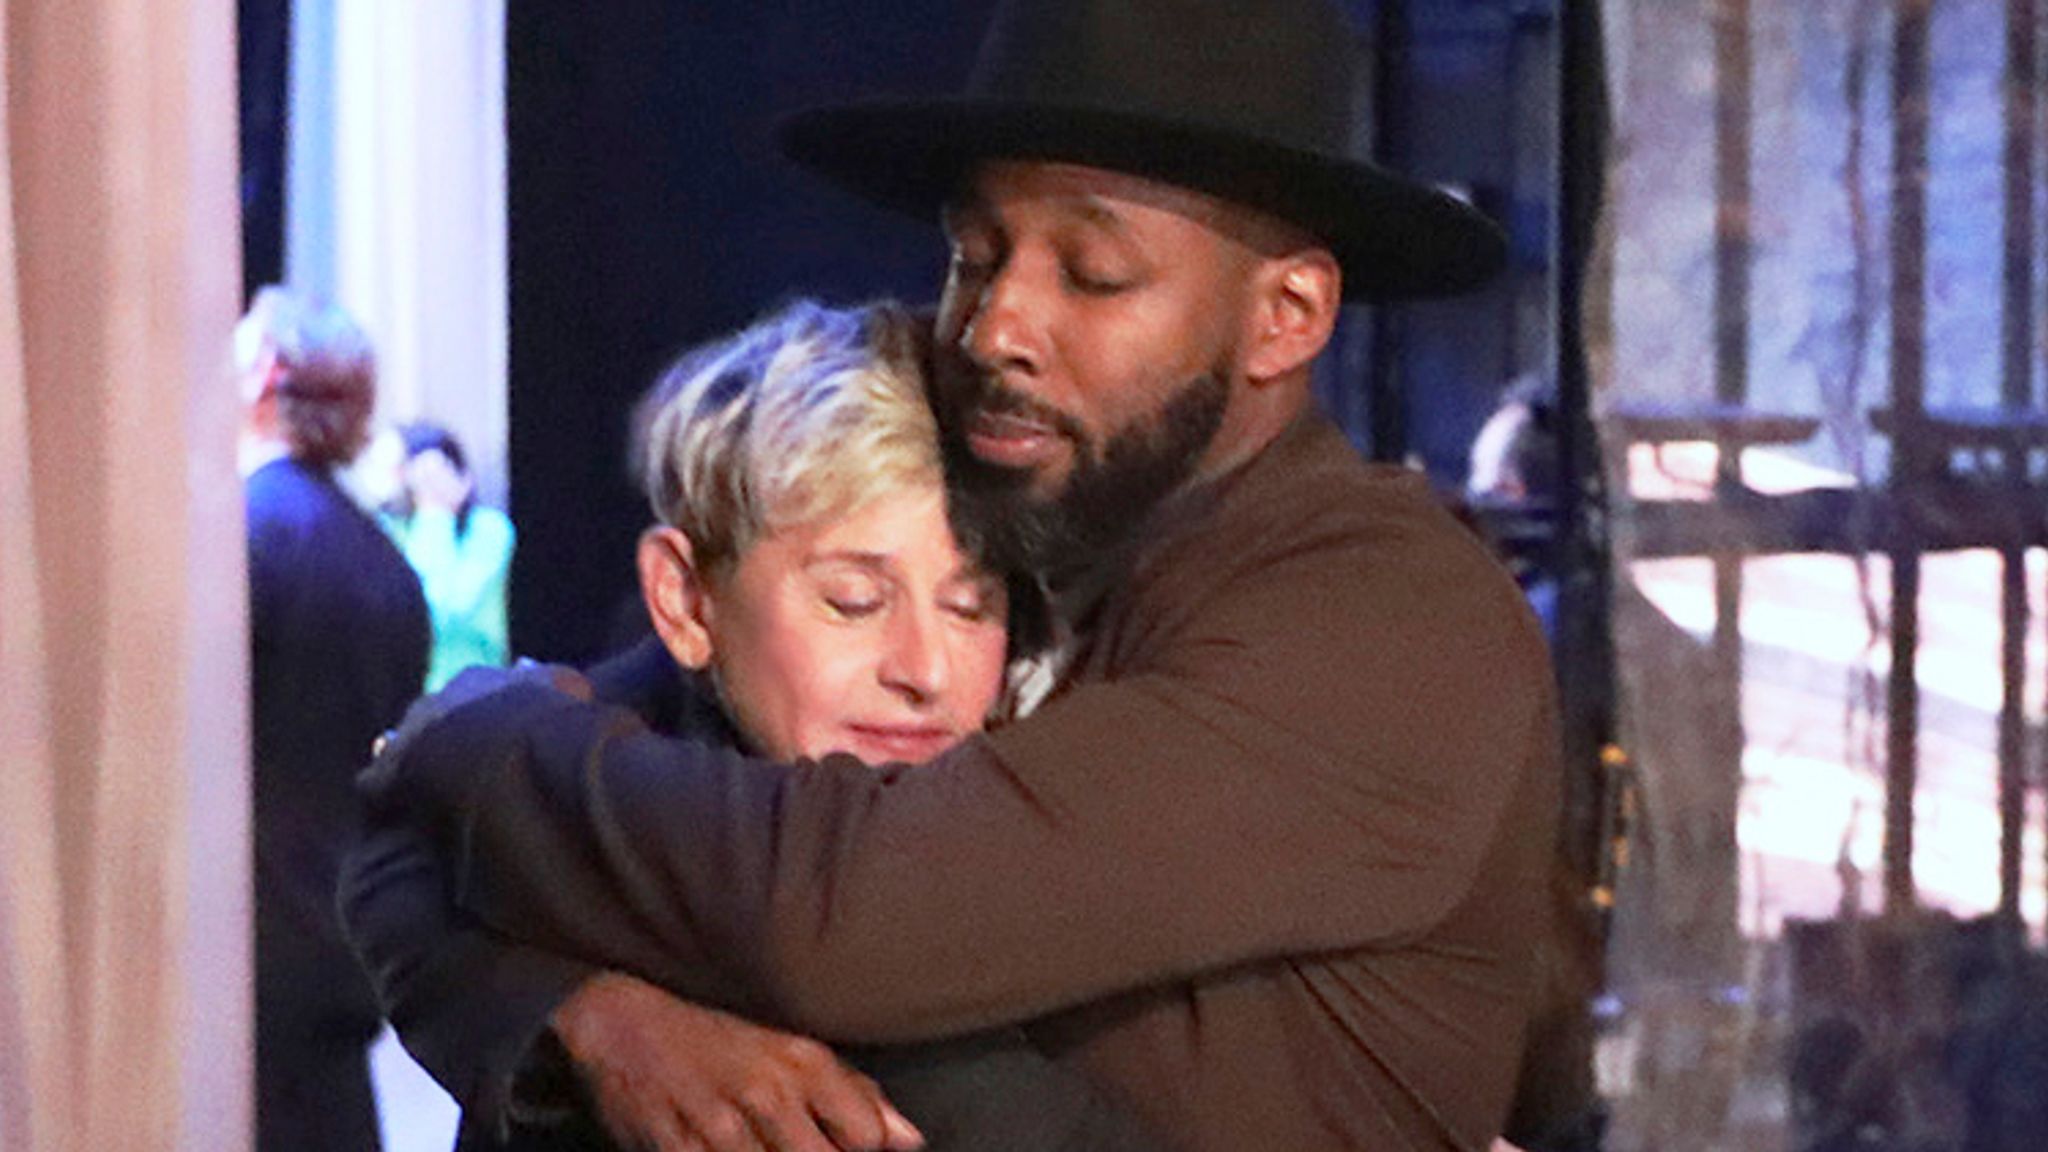 Stephen 'tWitch' Boss: Ellen DeGeneres 'heartbroken' over death of DJ and co-host as celebrities pay tribute | Ents & Arts News | Sky News